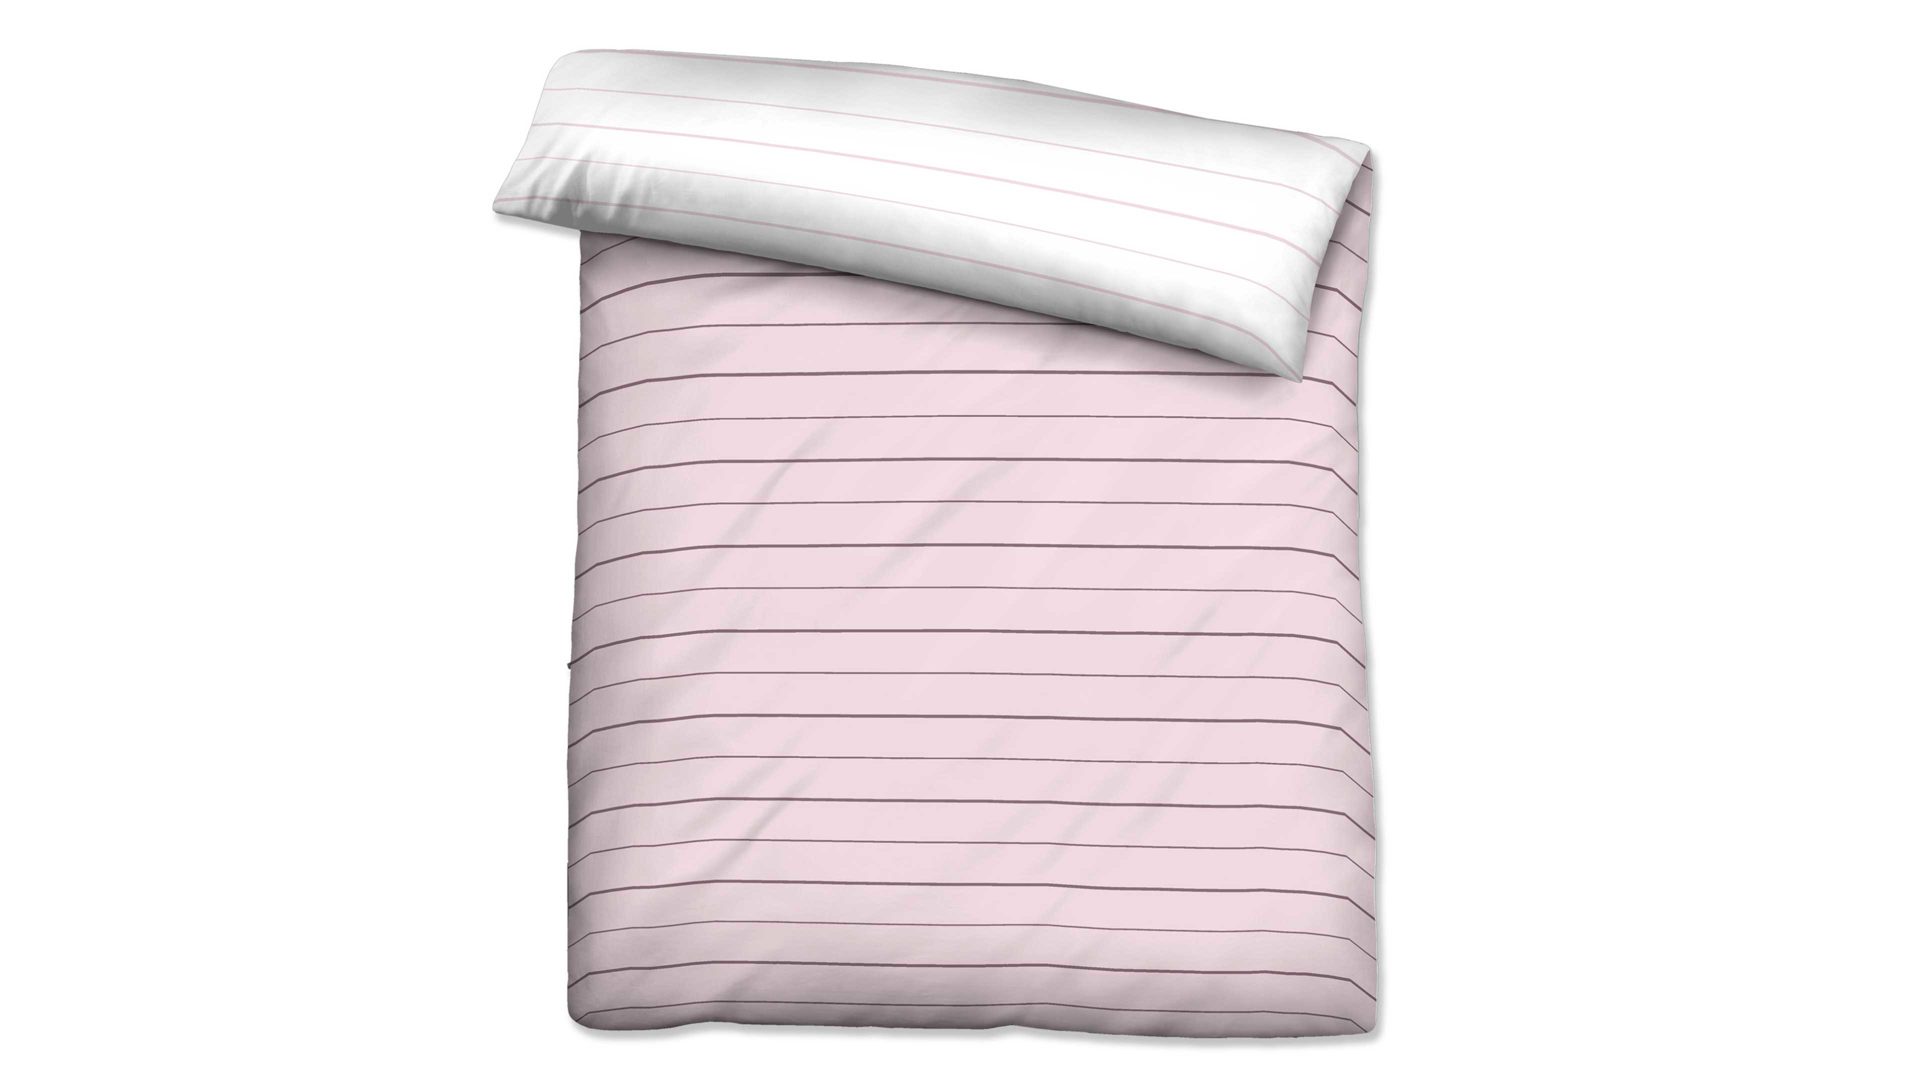 Bettbezug Biberna aus Stoff in Pastellfarben biberna Mako-Satin Bettdeckenbezug Streifen Mix & Match rosefarbene & sturmgraue Streifen – ca. 200 x 200 cm